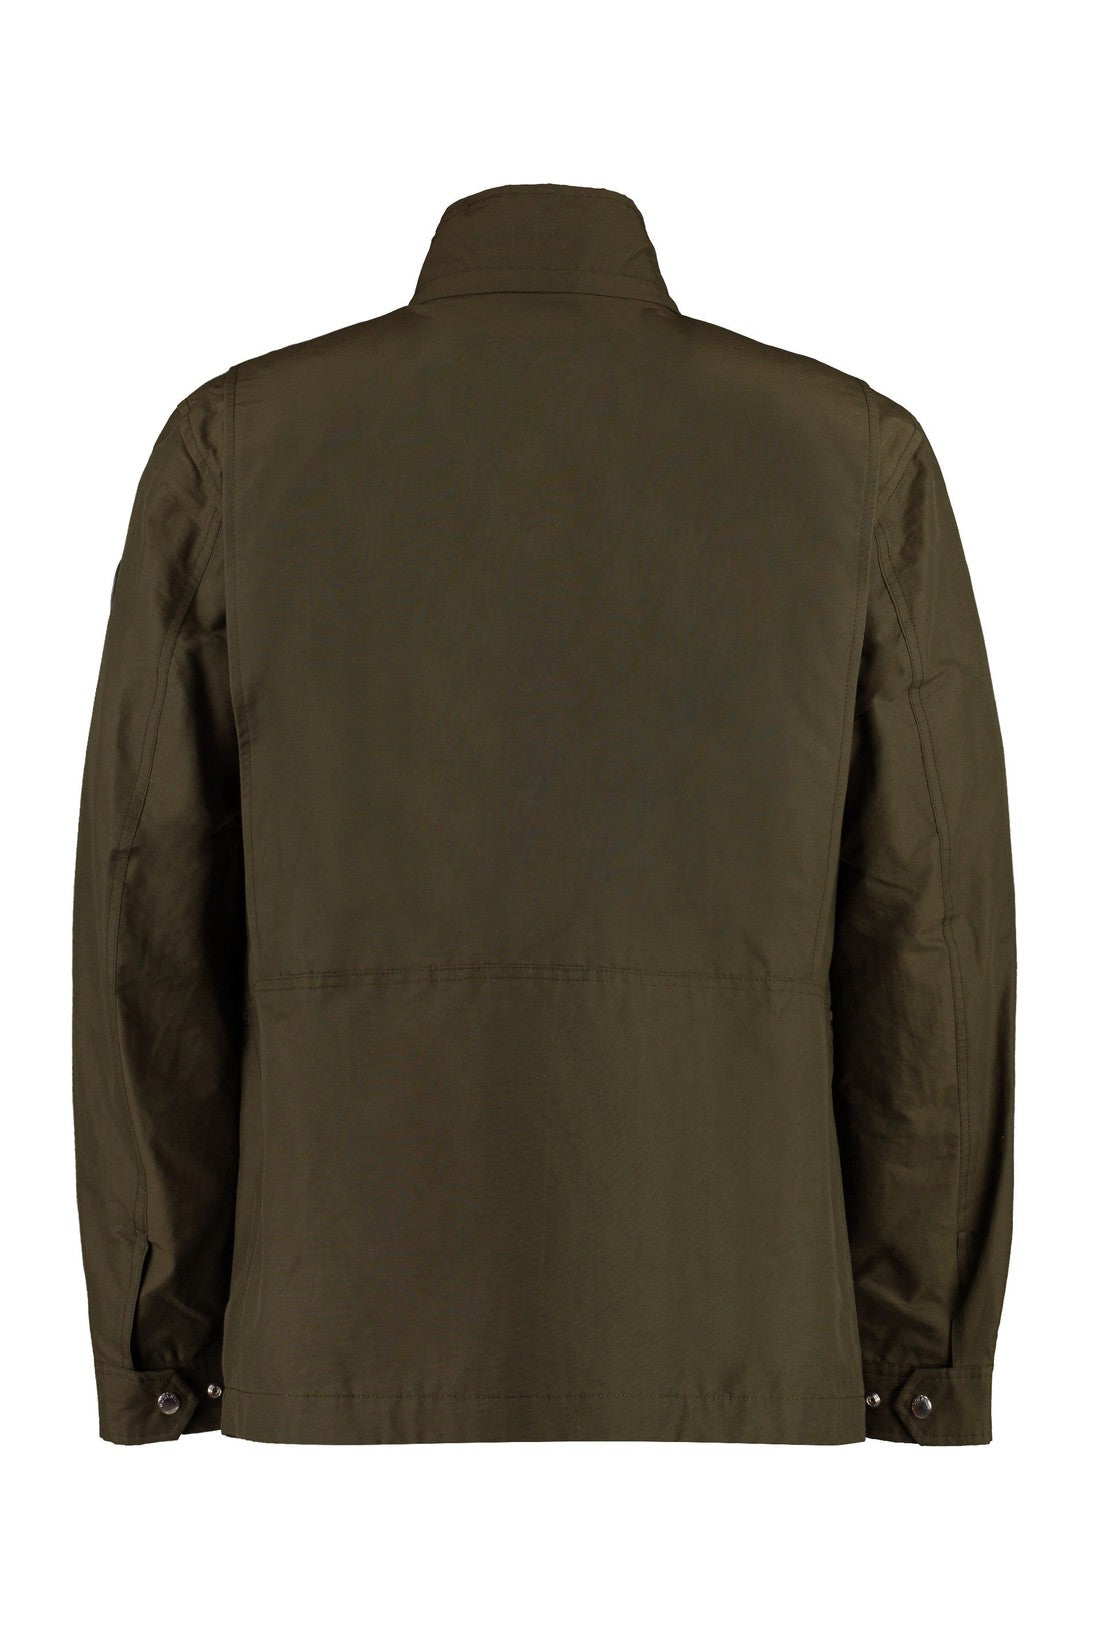 Woolrich-OUTLET-SALE-Cruiser Field multi-pocket jacket-ARCHIVIST